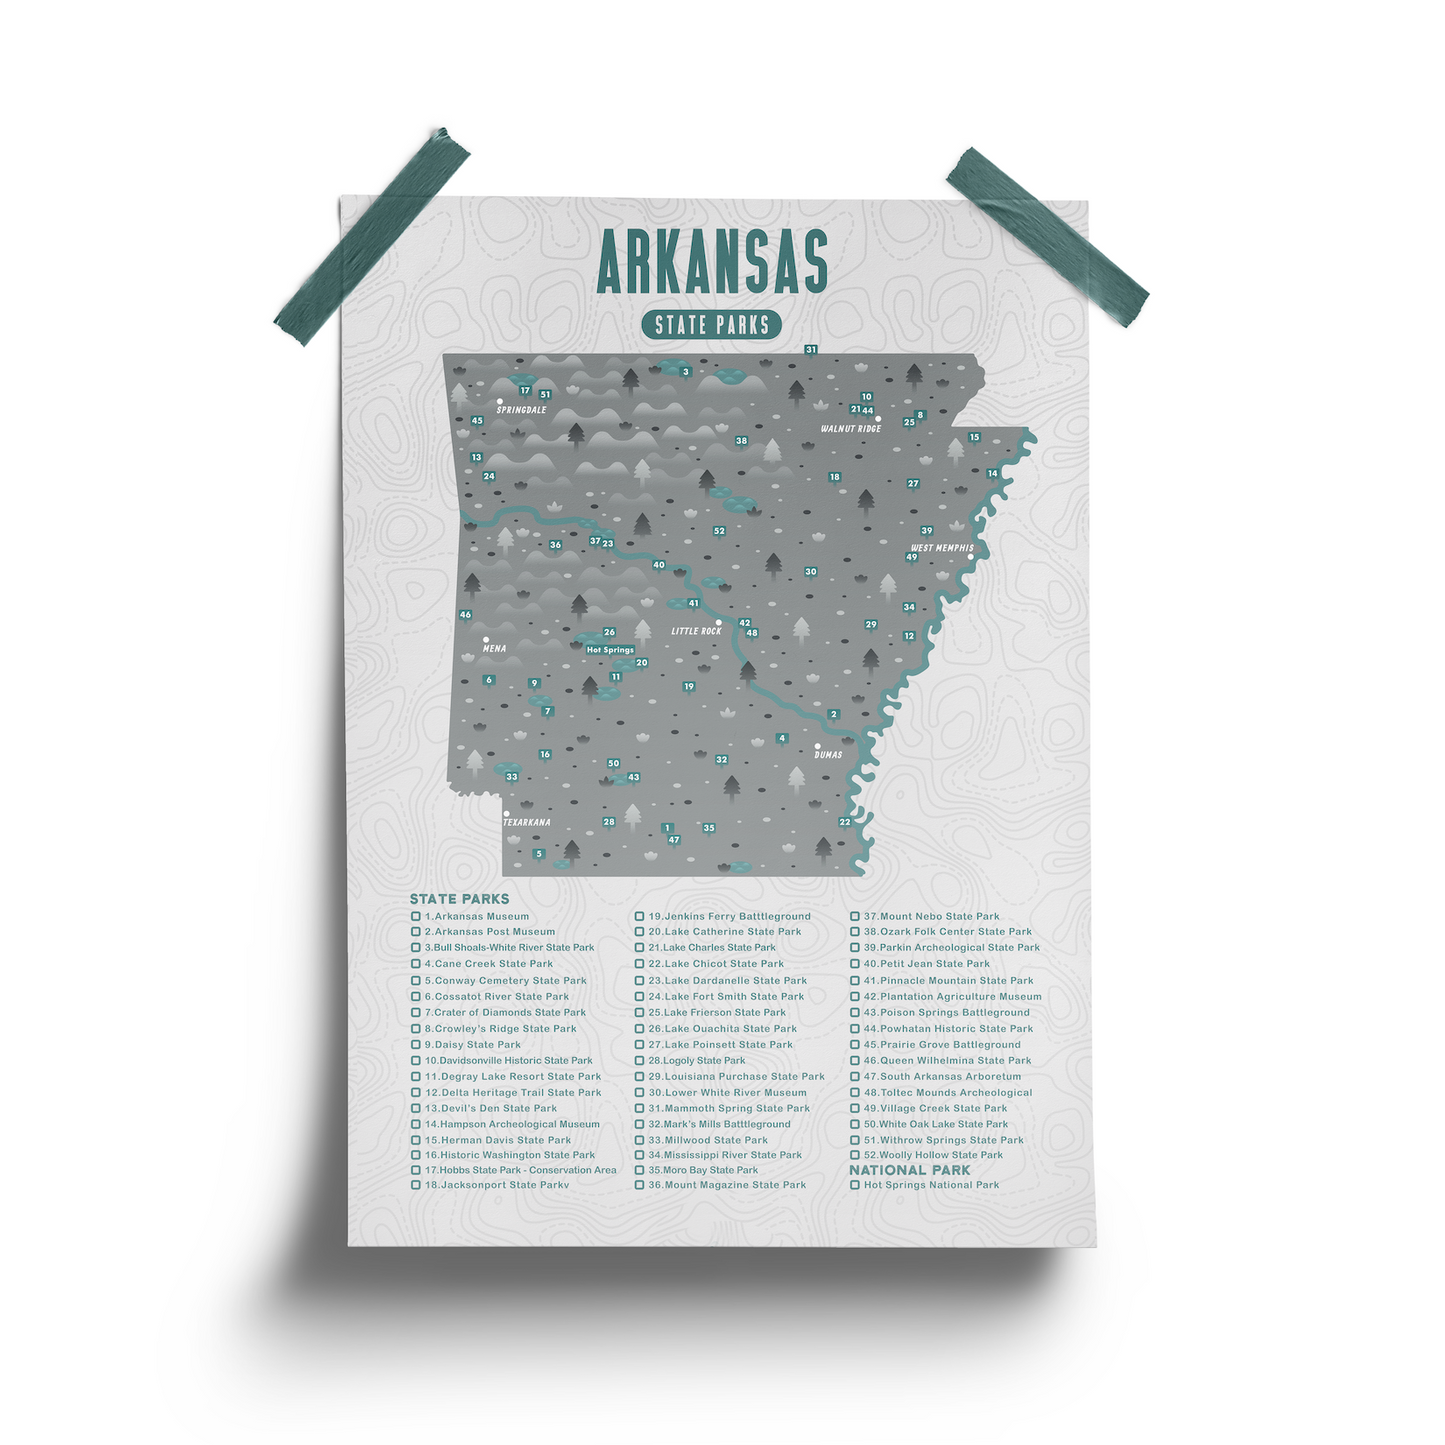 Arkansas State Park Map - Checklist